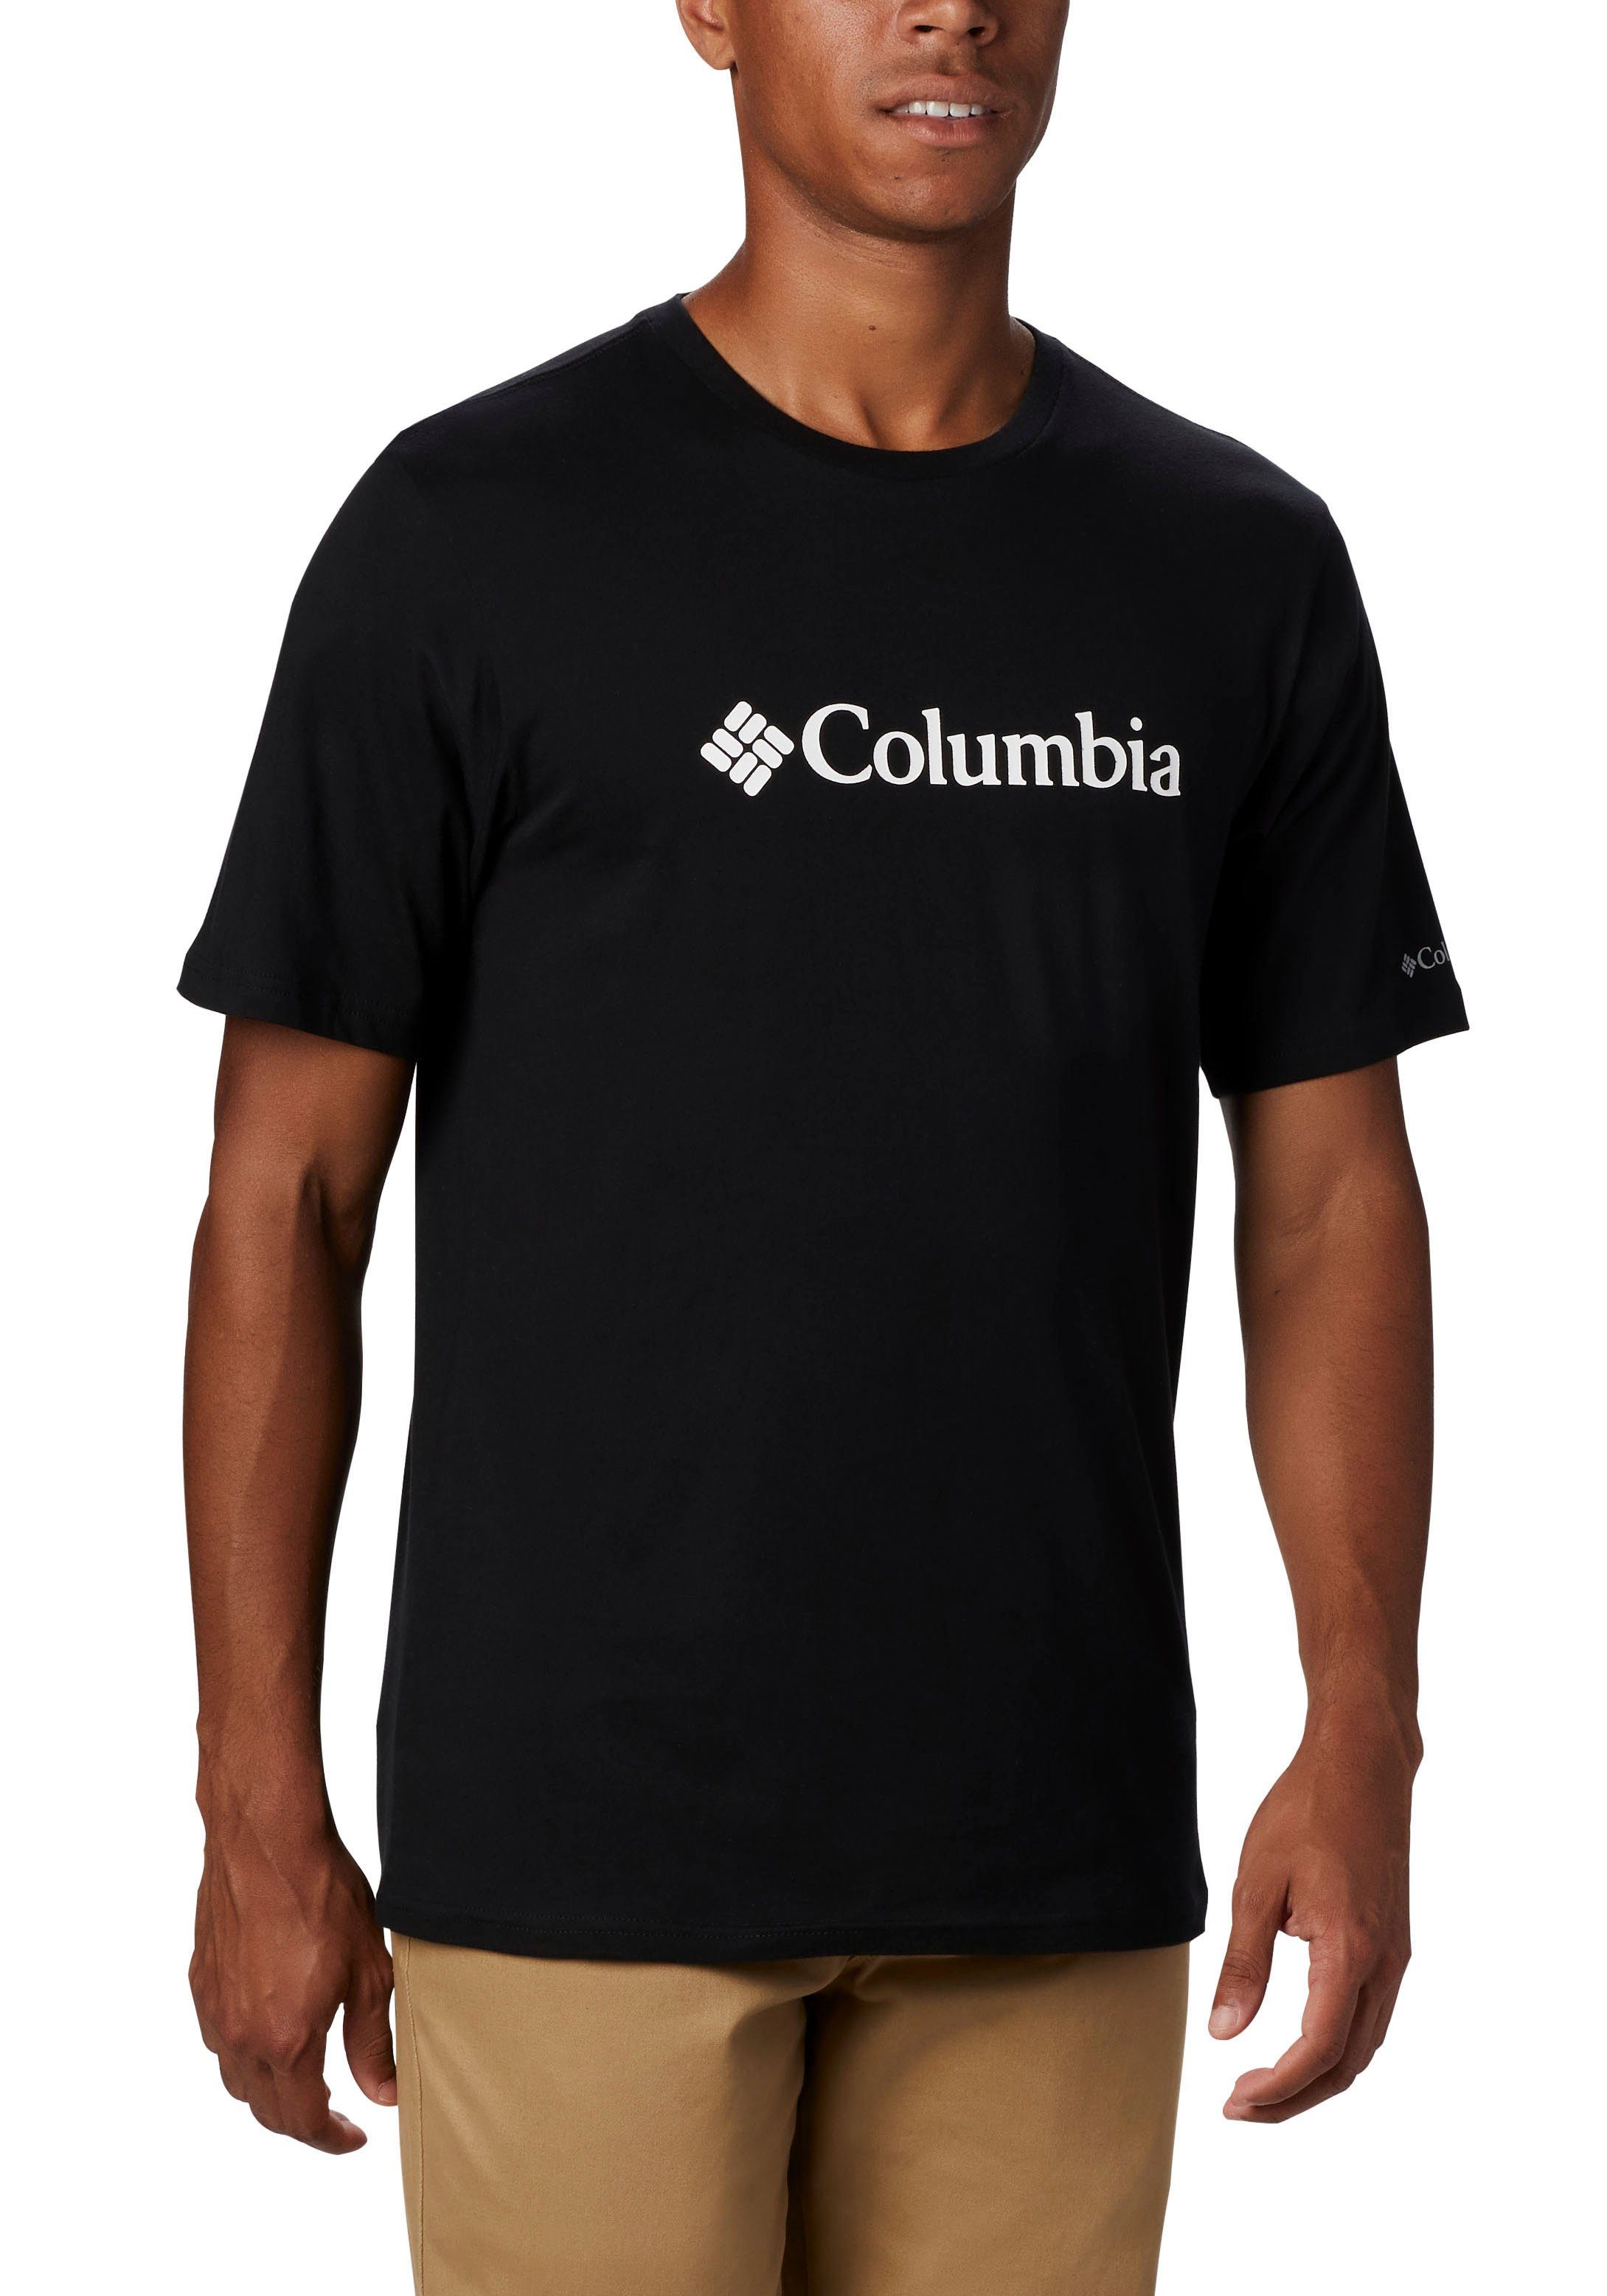 Columbia T-Shirt schwarz CSC